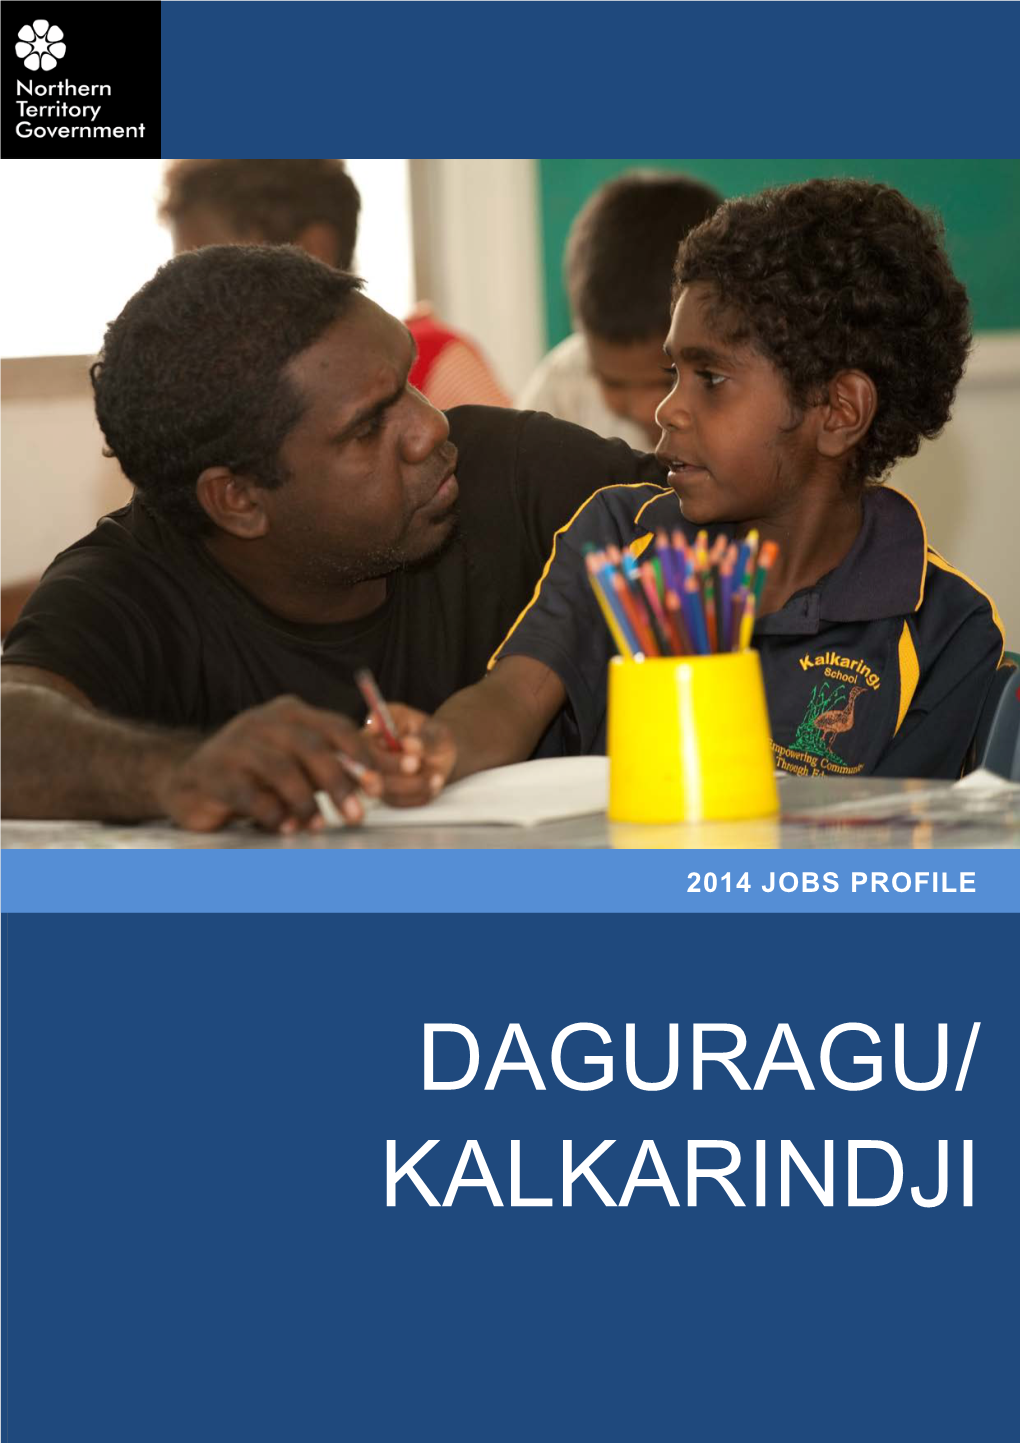 Daguragu/Kalkarindji Jobs Profile 2014